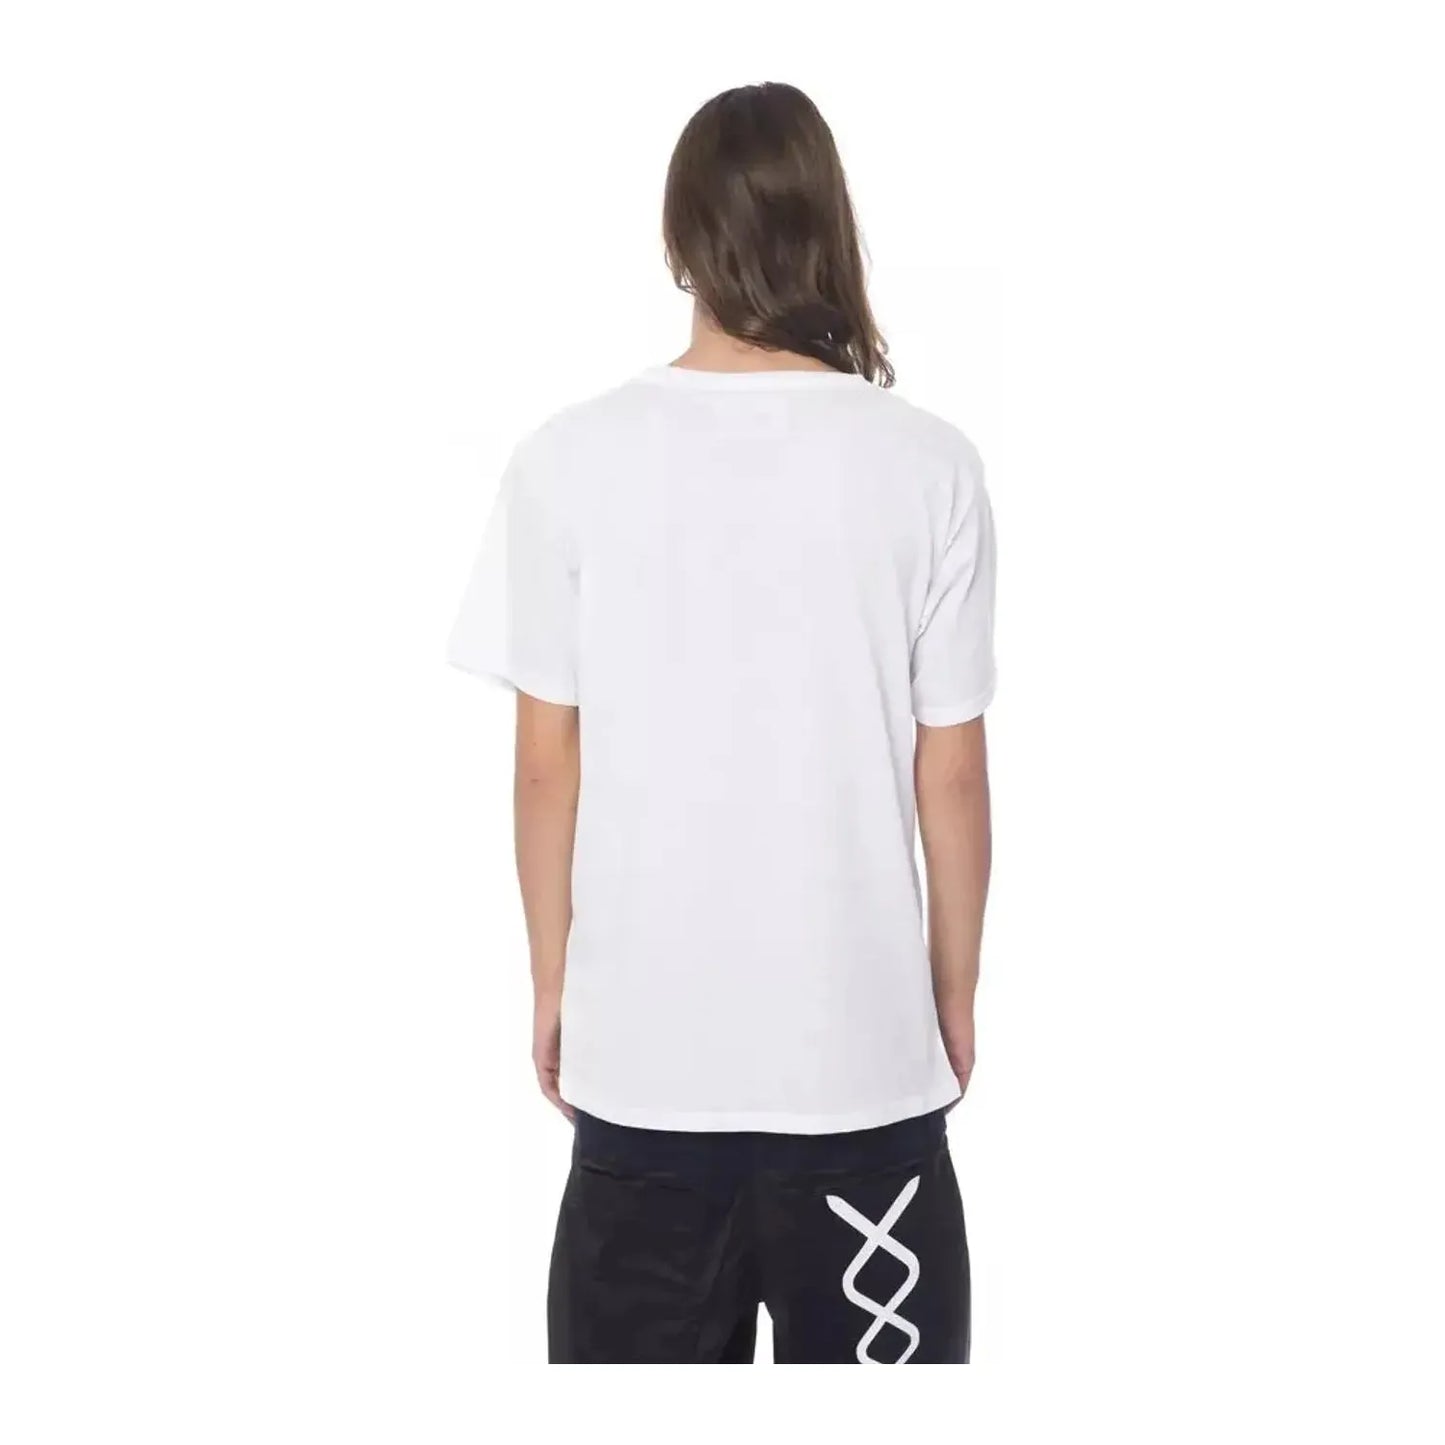 Nicolo Tonetto Chic Round Neck Short Sleeve Printed Tee bianco-white-t-shirt-2